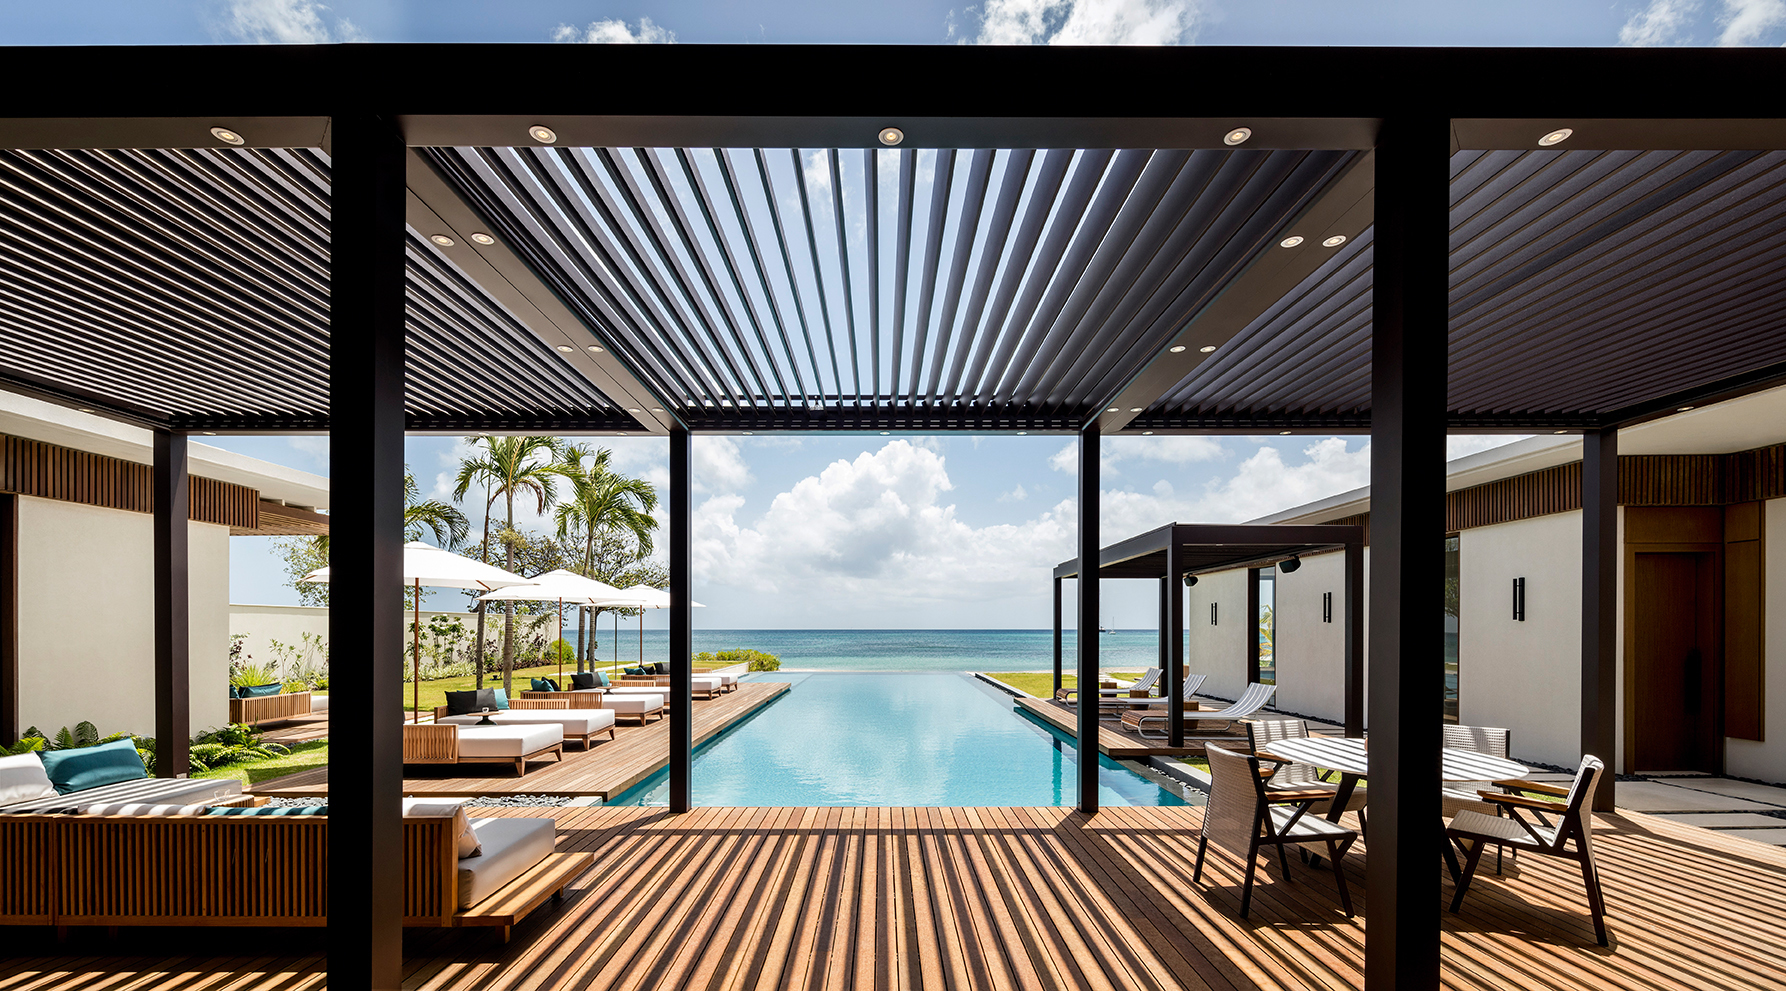 Beachfront Villa Pool Deck And Beach With Open Pergolas